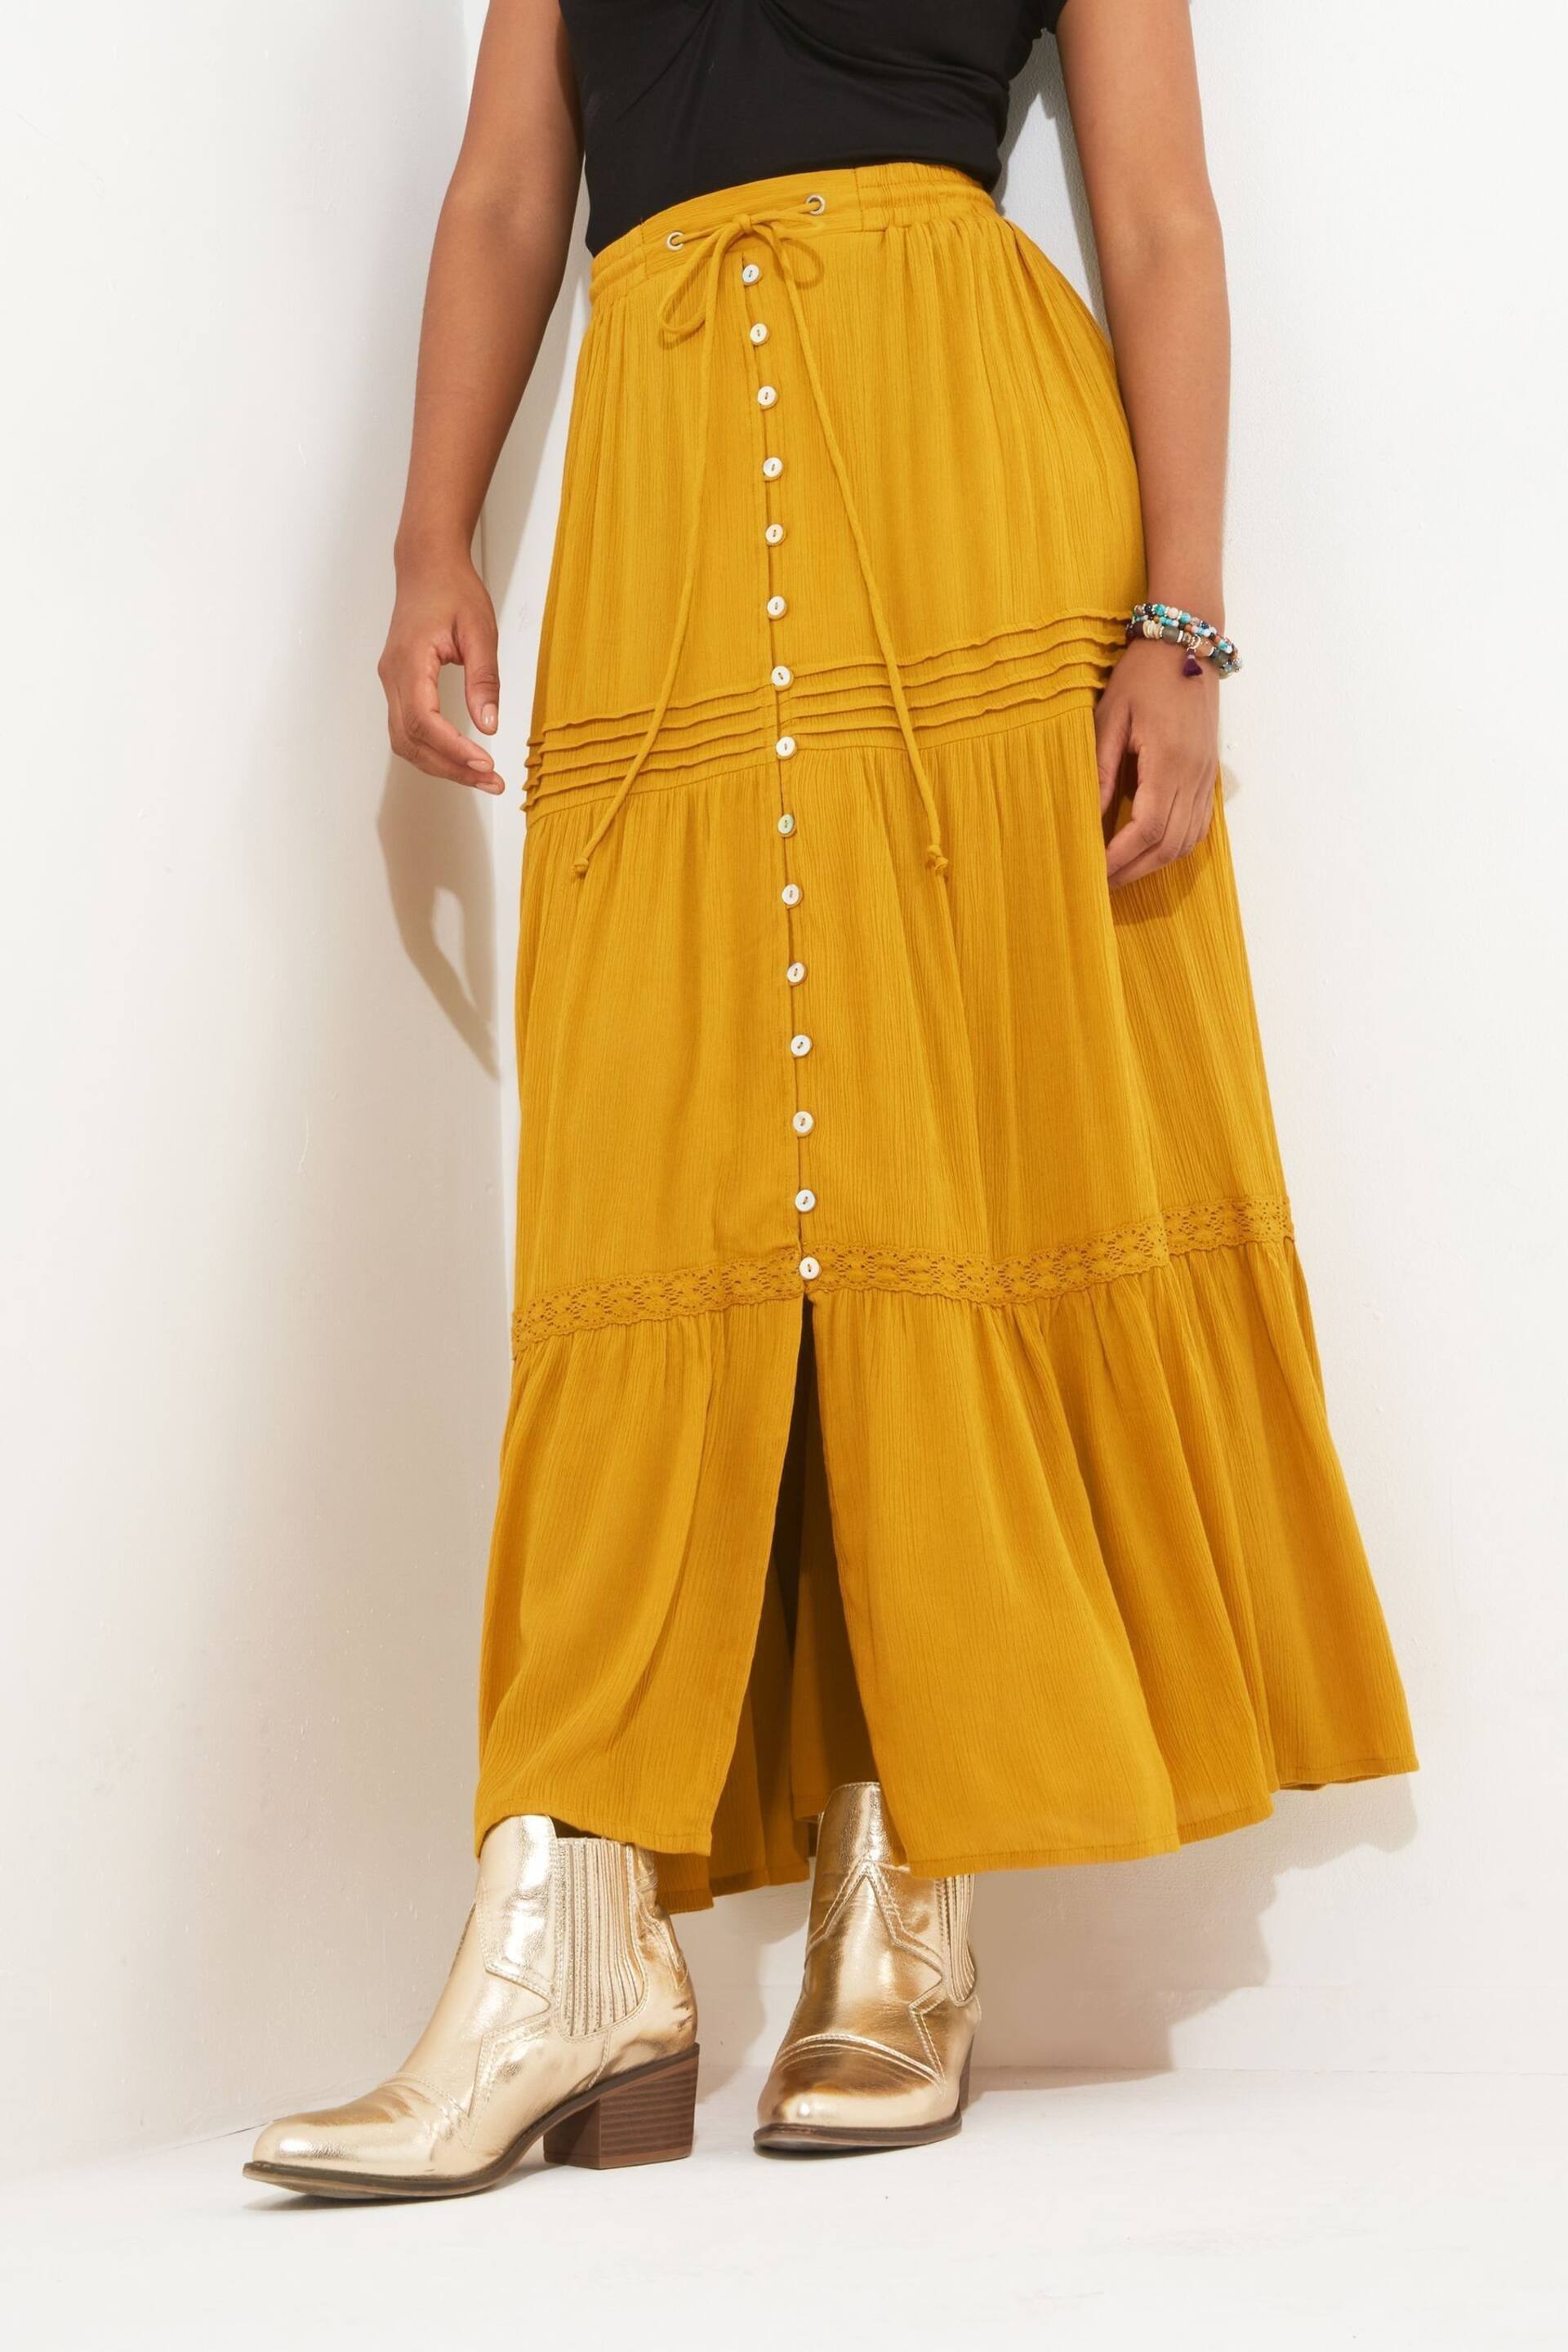 Joe Browns Yellow Pintuck Tie Waist Maxi Skirt - Image 1 of 5